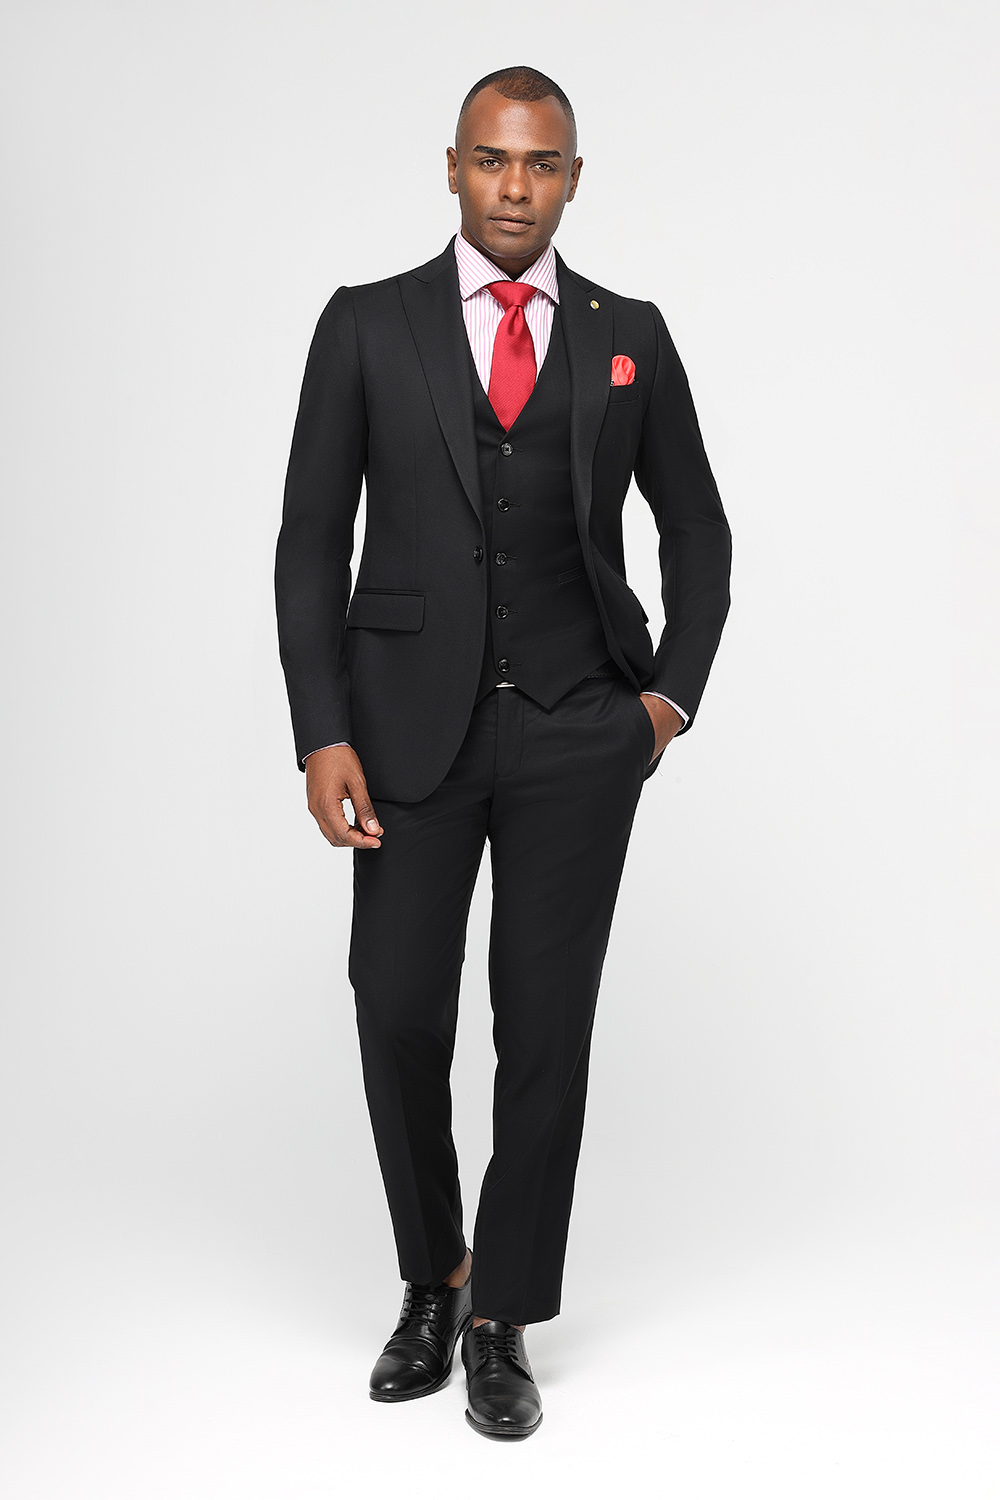 Jake Gyllenhaal's Top 20 Style Lessons from 2015 | Black suit men, Black  suits, Black suit red tie